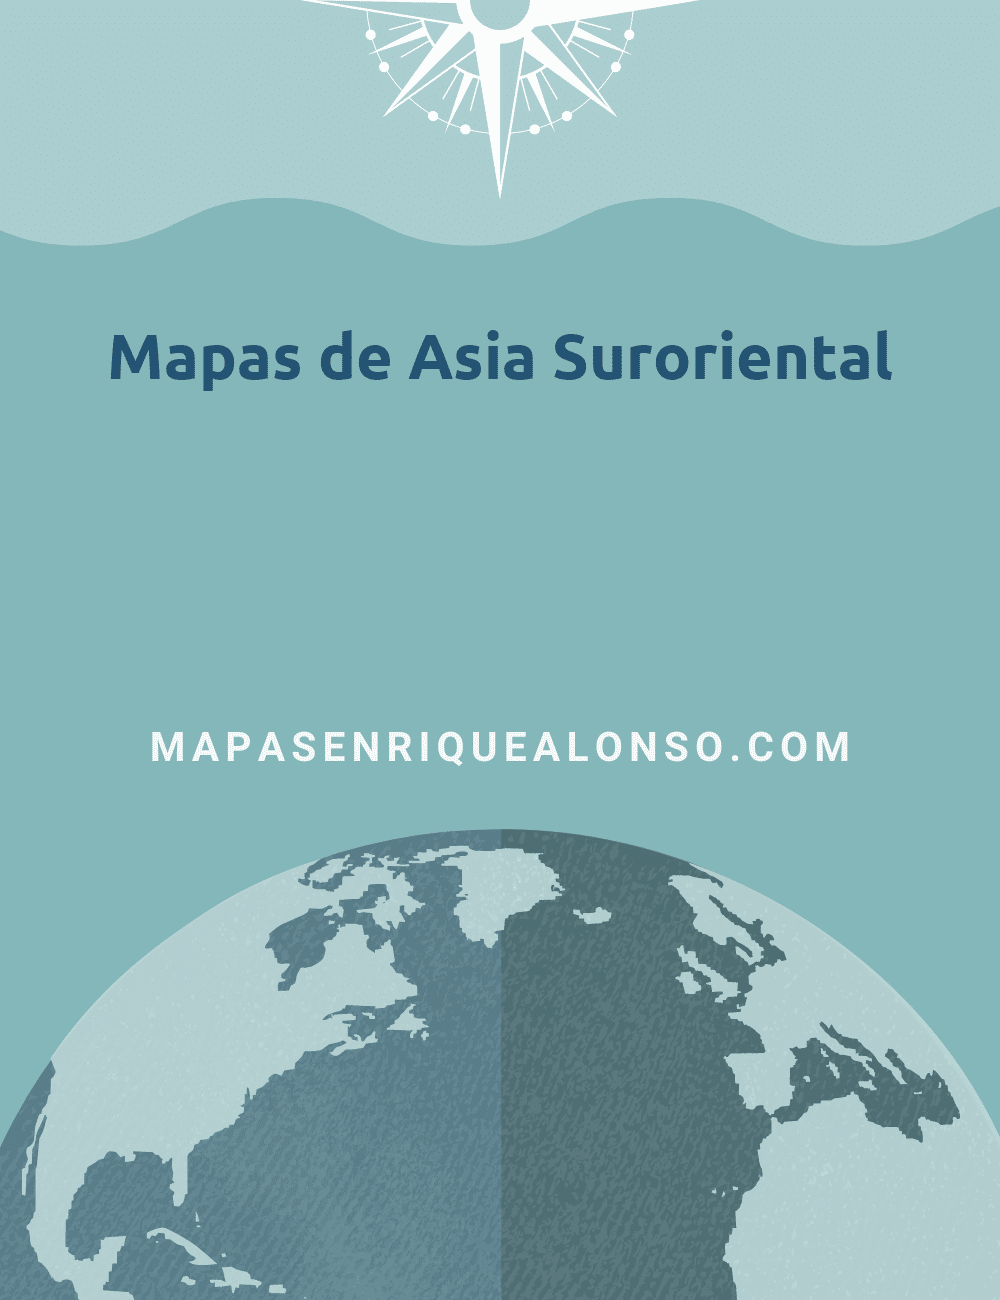 Mapas de Asia Suroriental